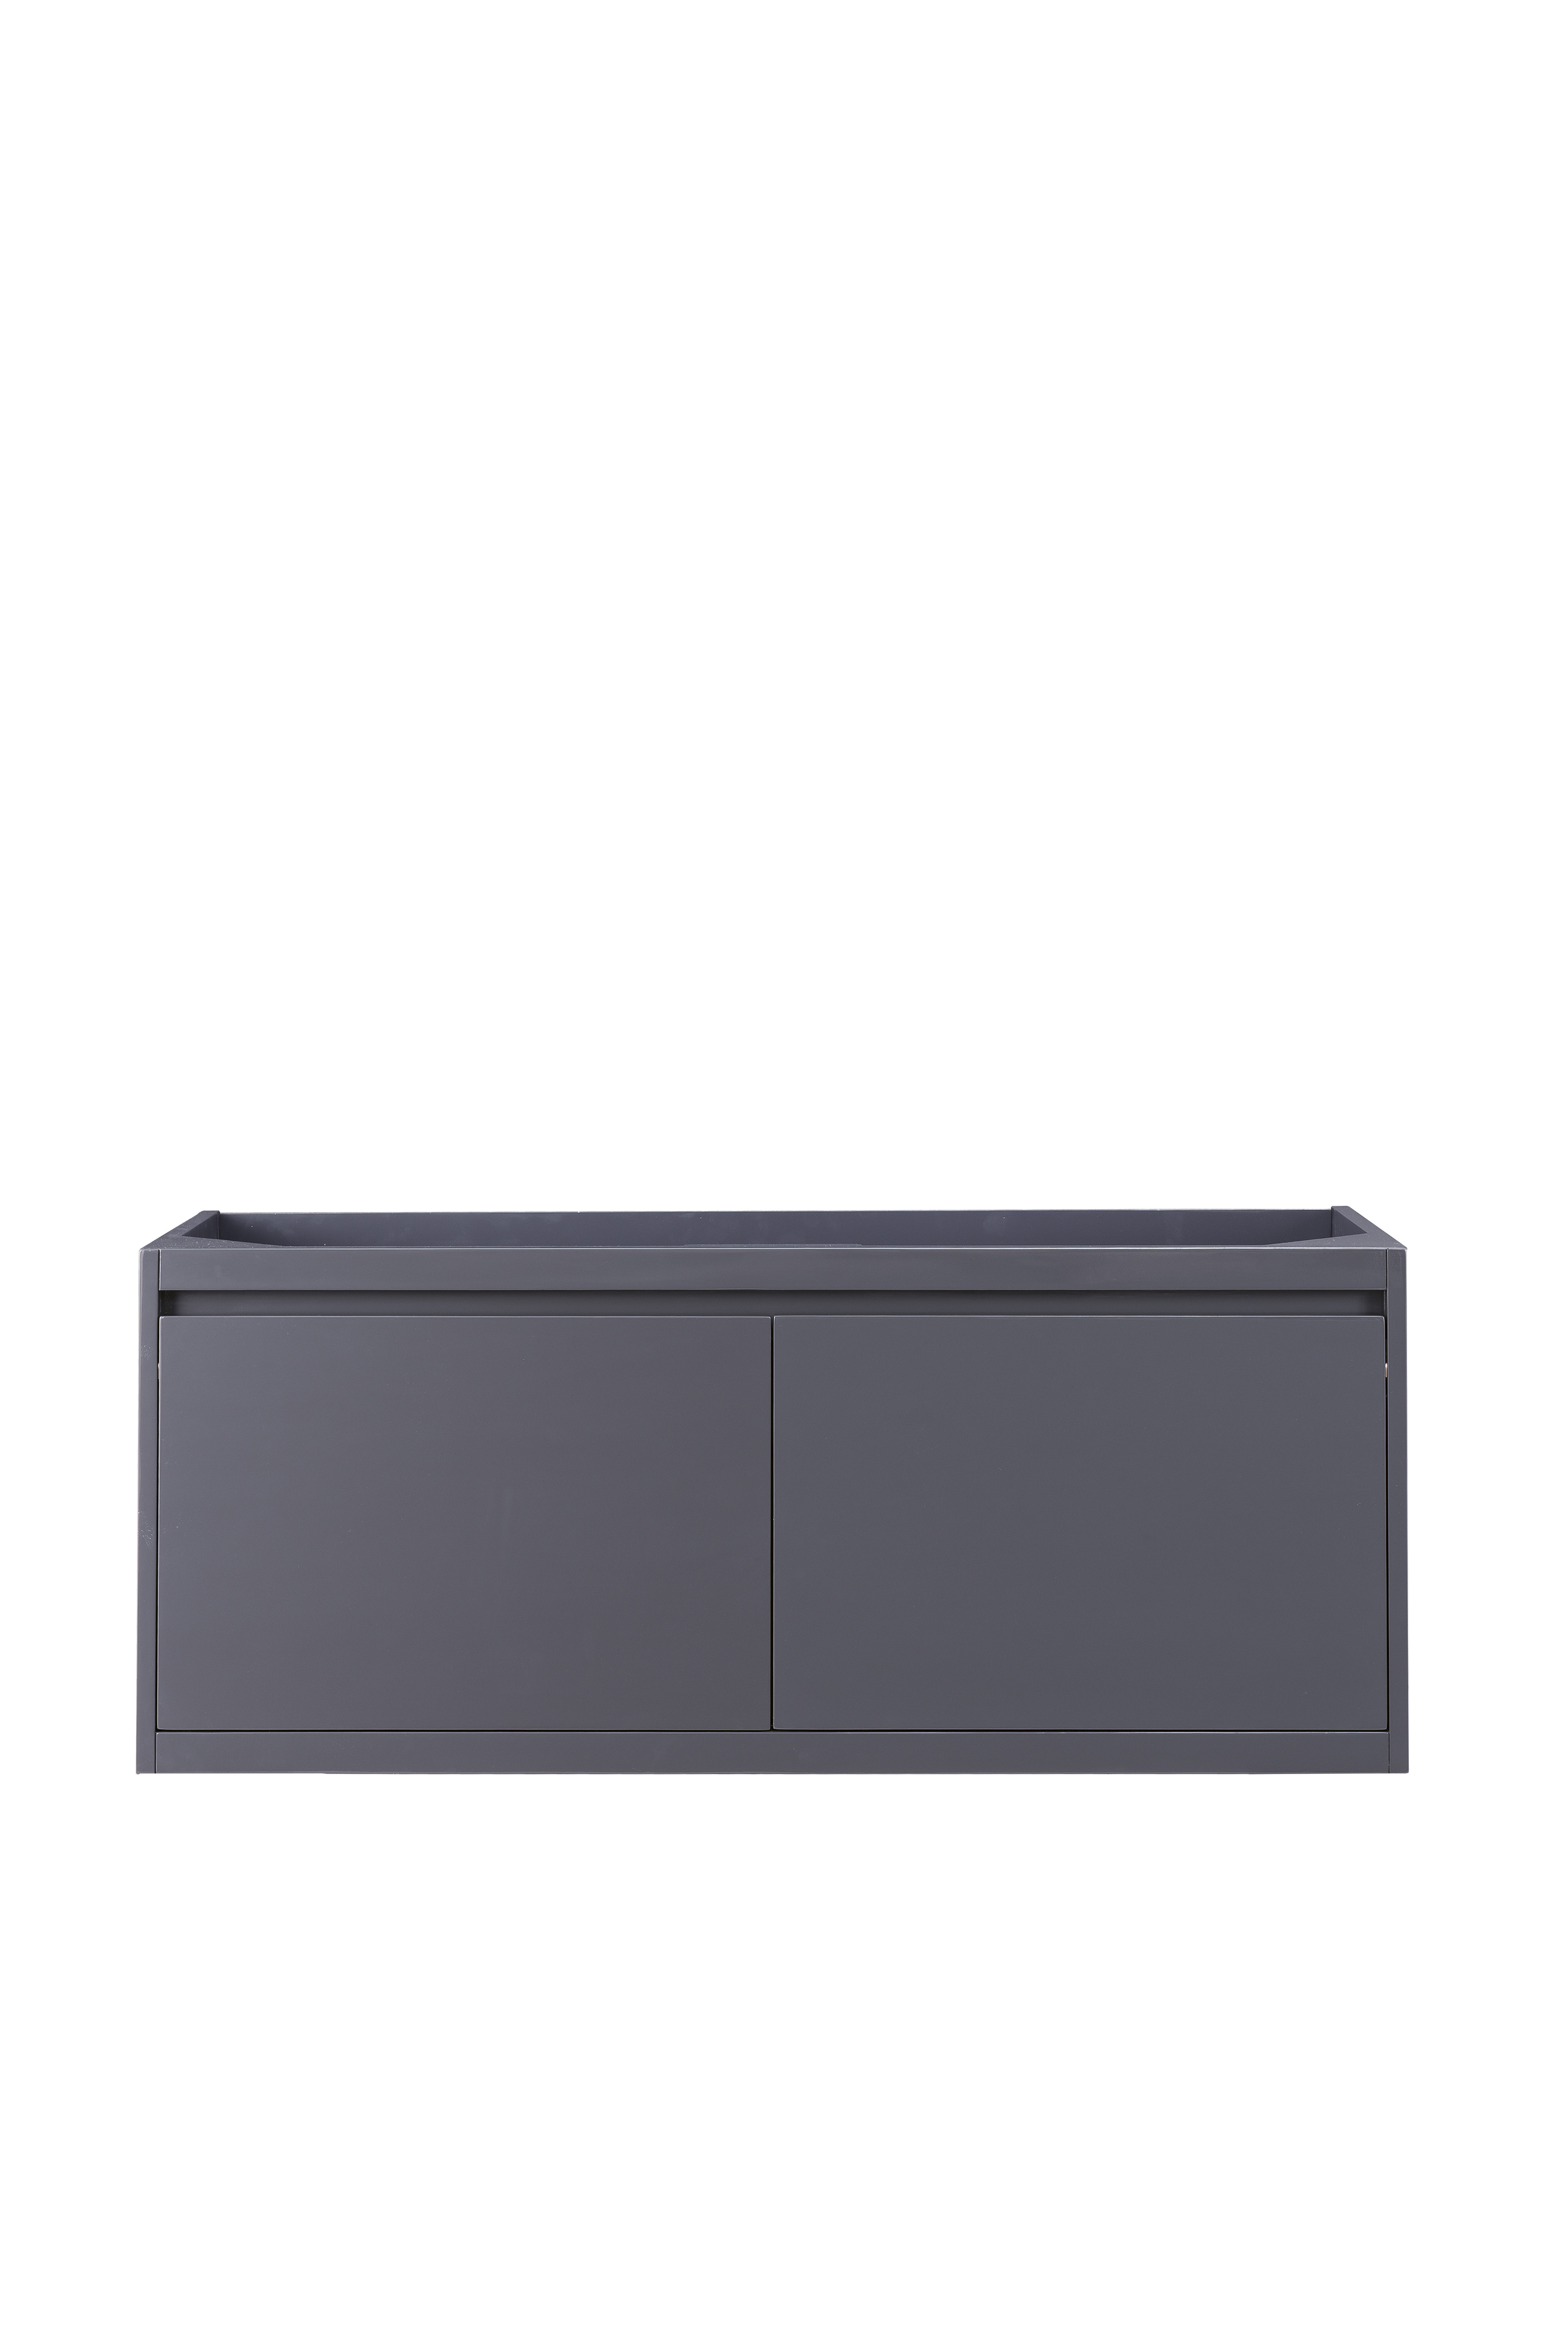 James Martin 801-V47.3-MGG Milan 47.3" Single Vanity Cabinet, Modern Grey Glossy